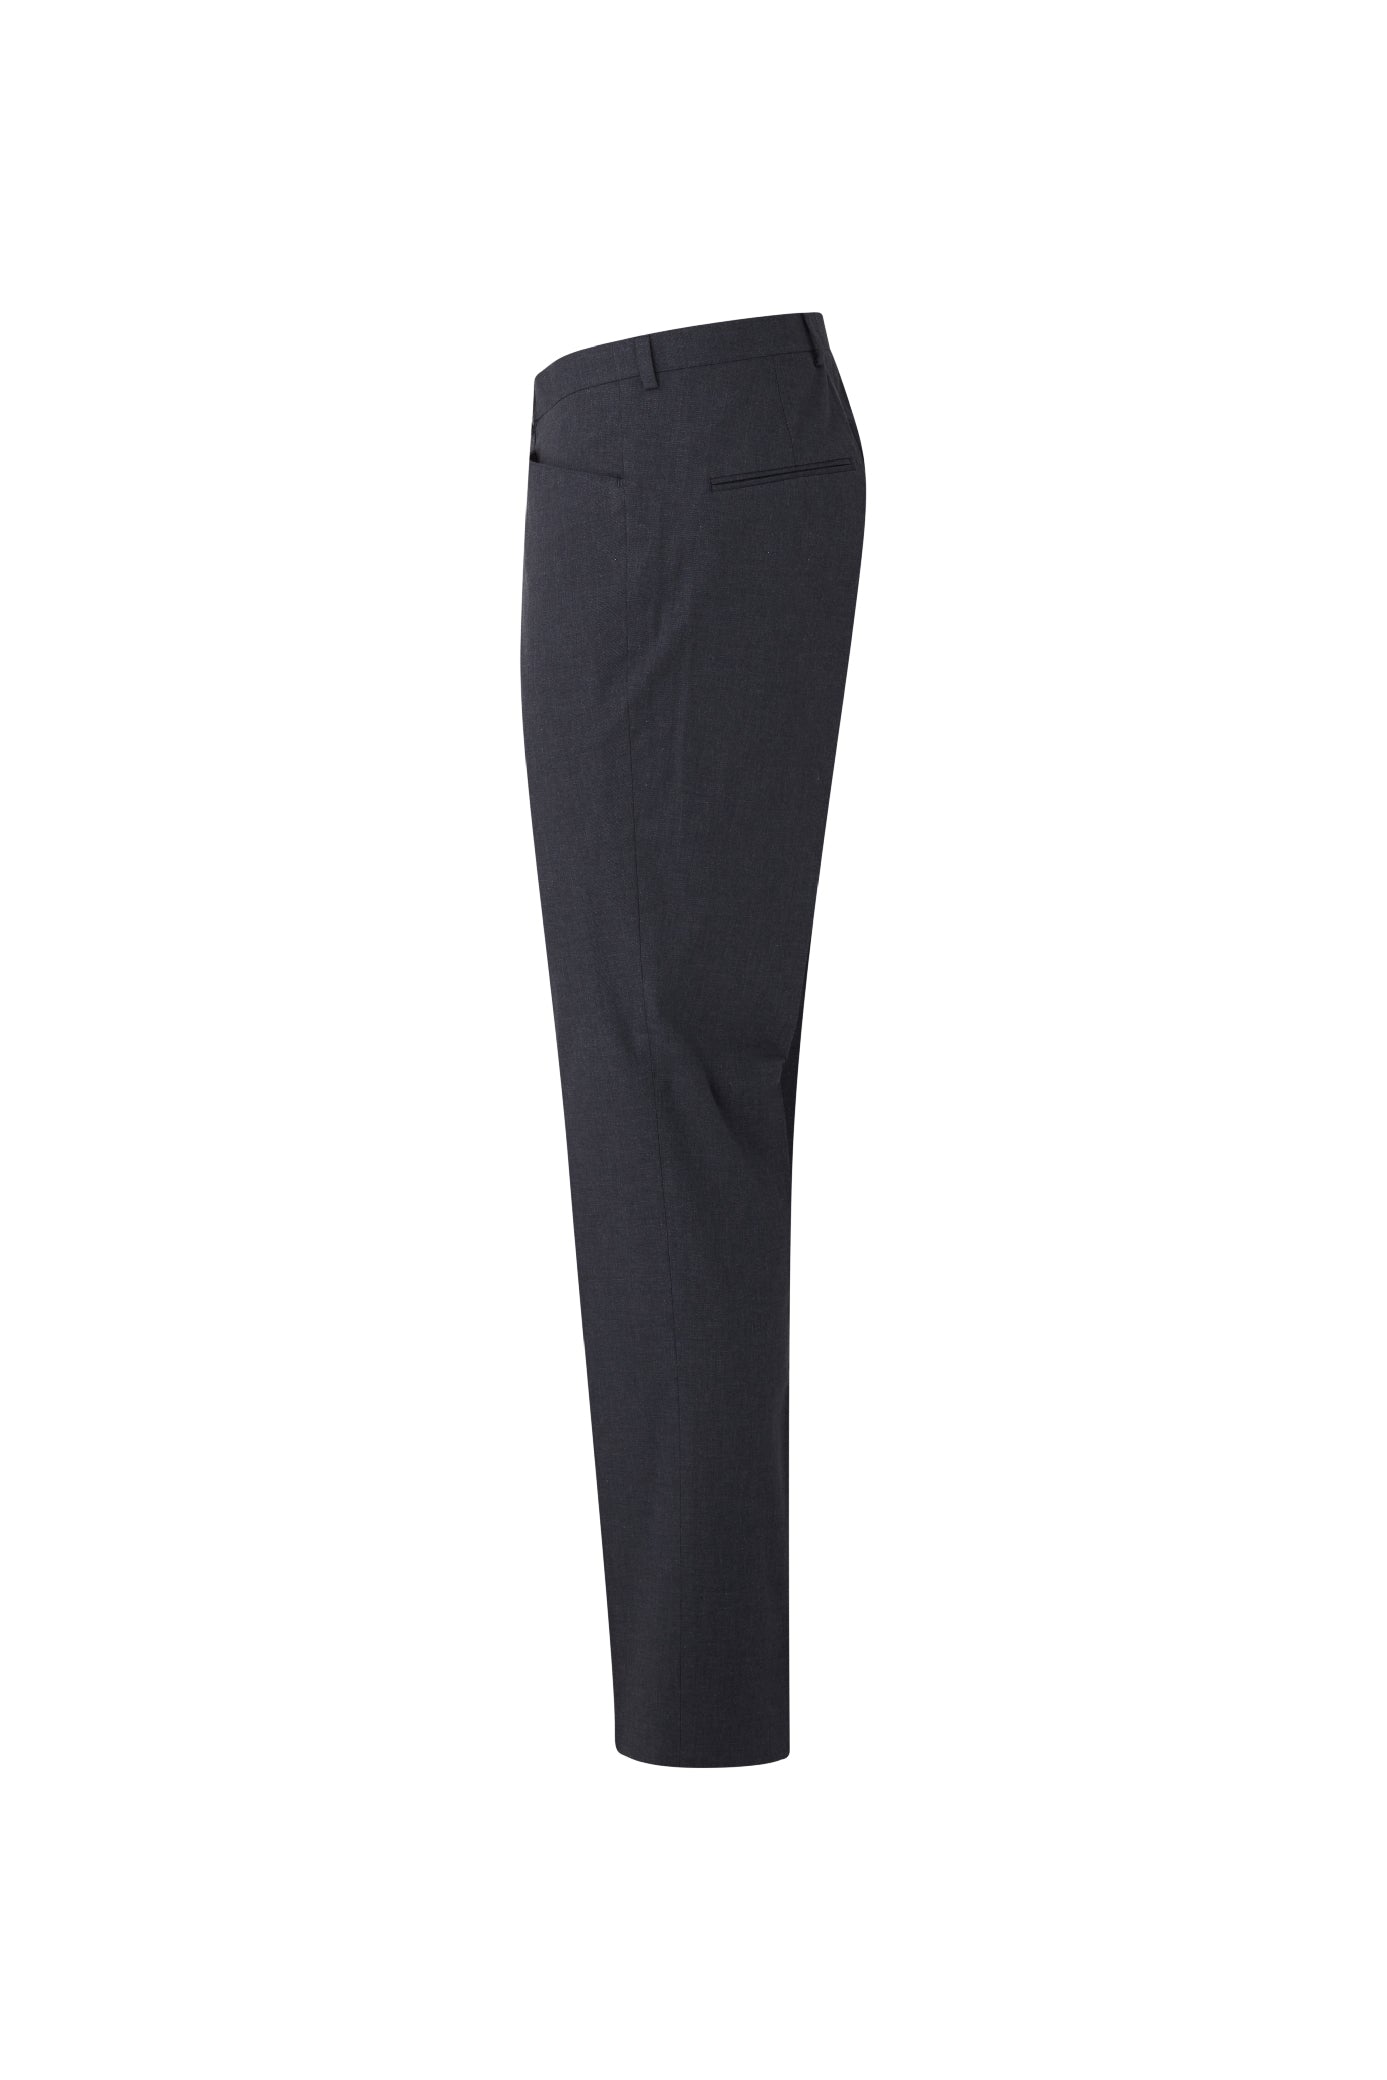 Reese cotton stretch plain trouser